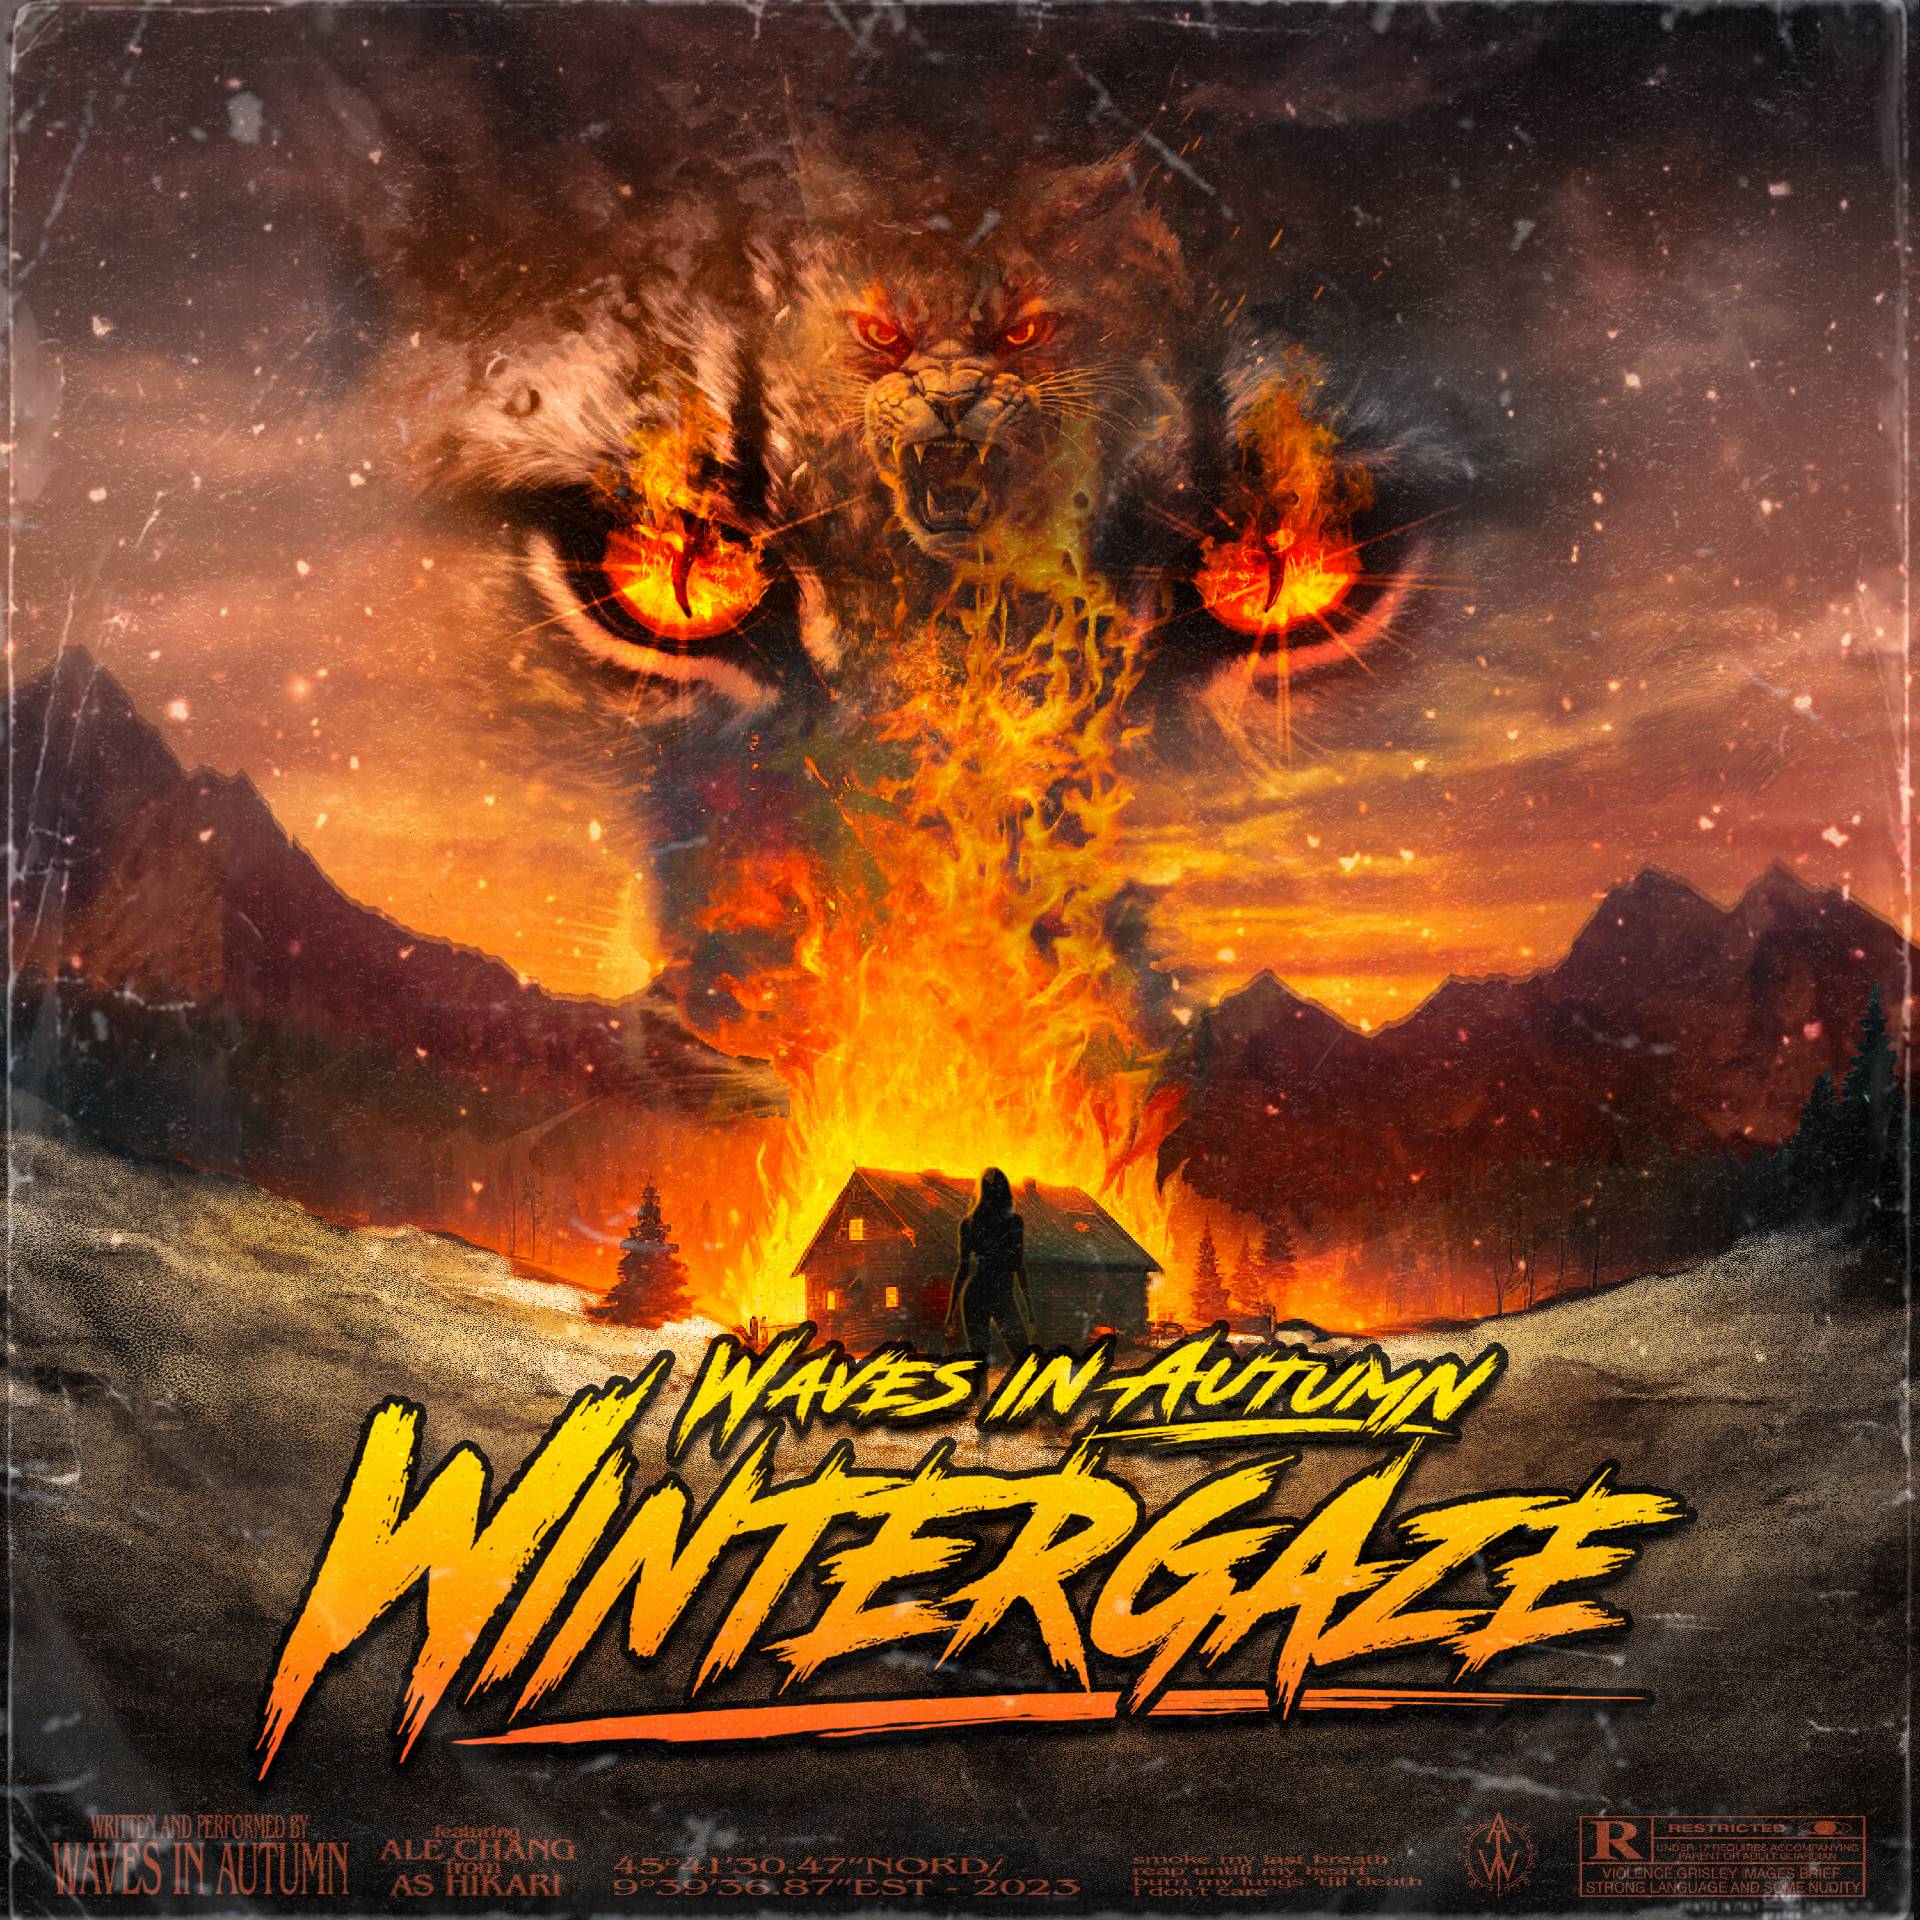 Waves in Autumn ‘Wintergaze’ album artwork